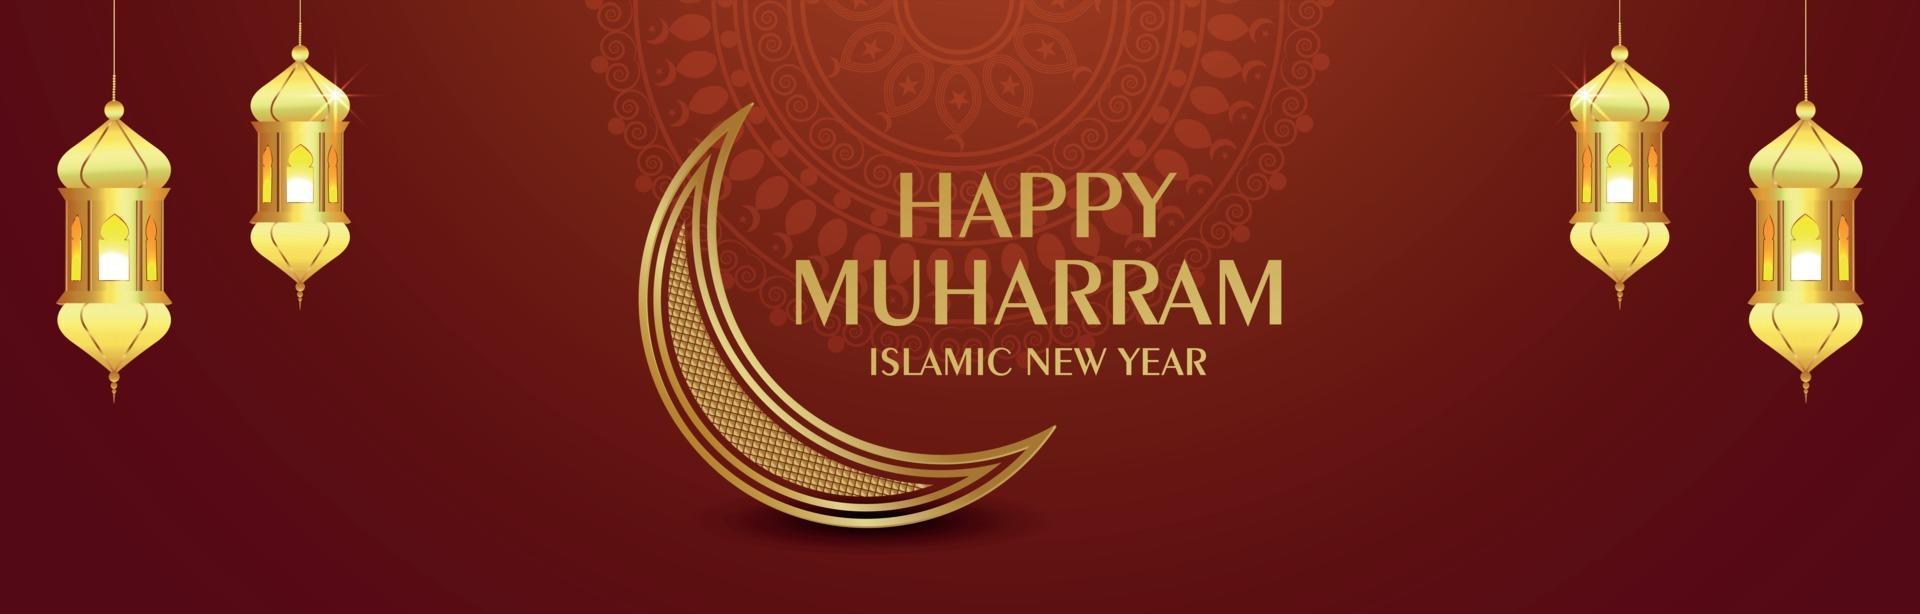 Happy Muharram Banner oder Header mit kreativen goldenen Laterne vektor